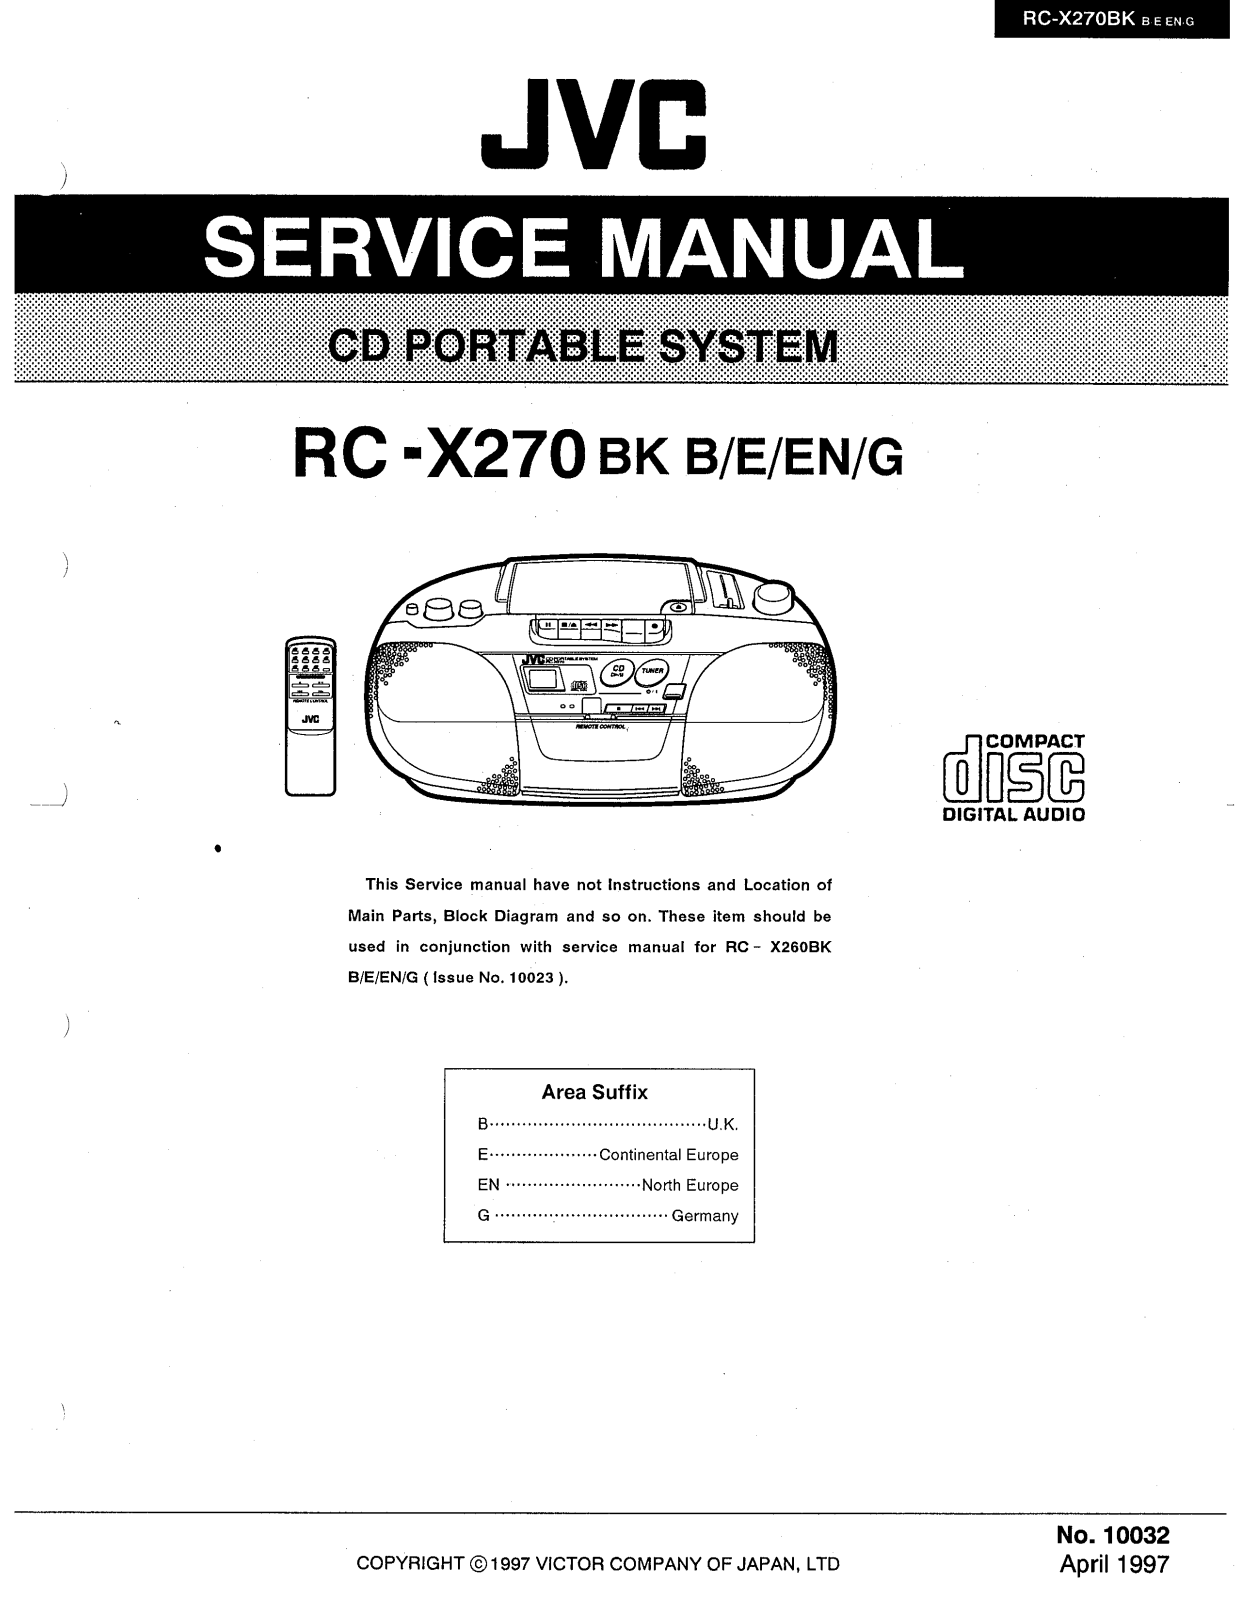 JVC RC-X270BKB Service Manual